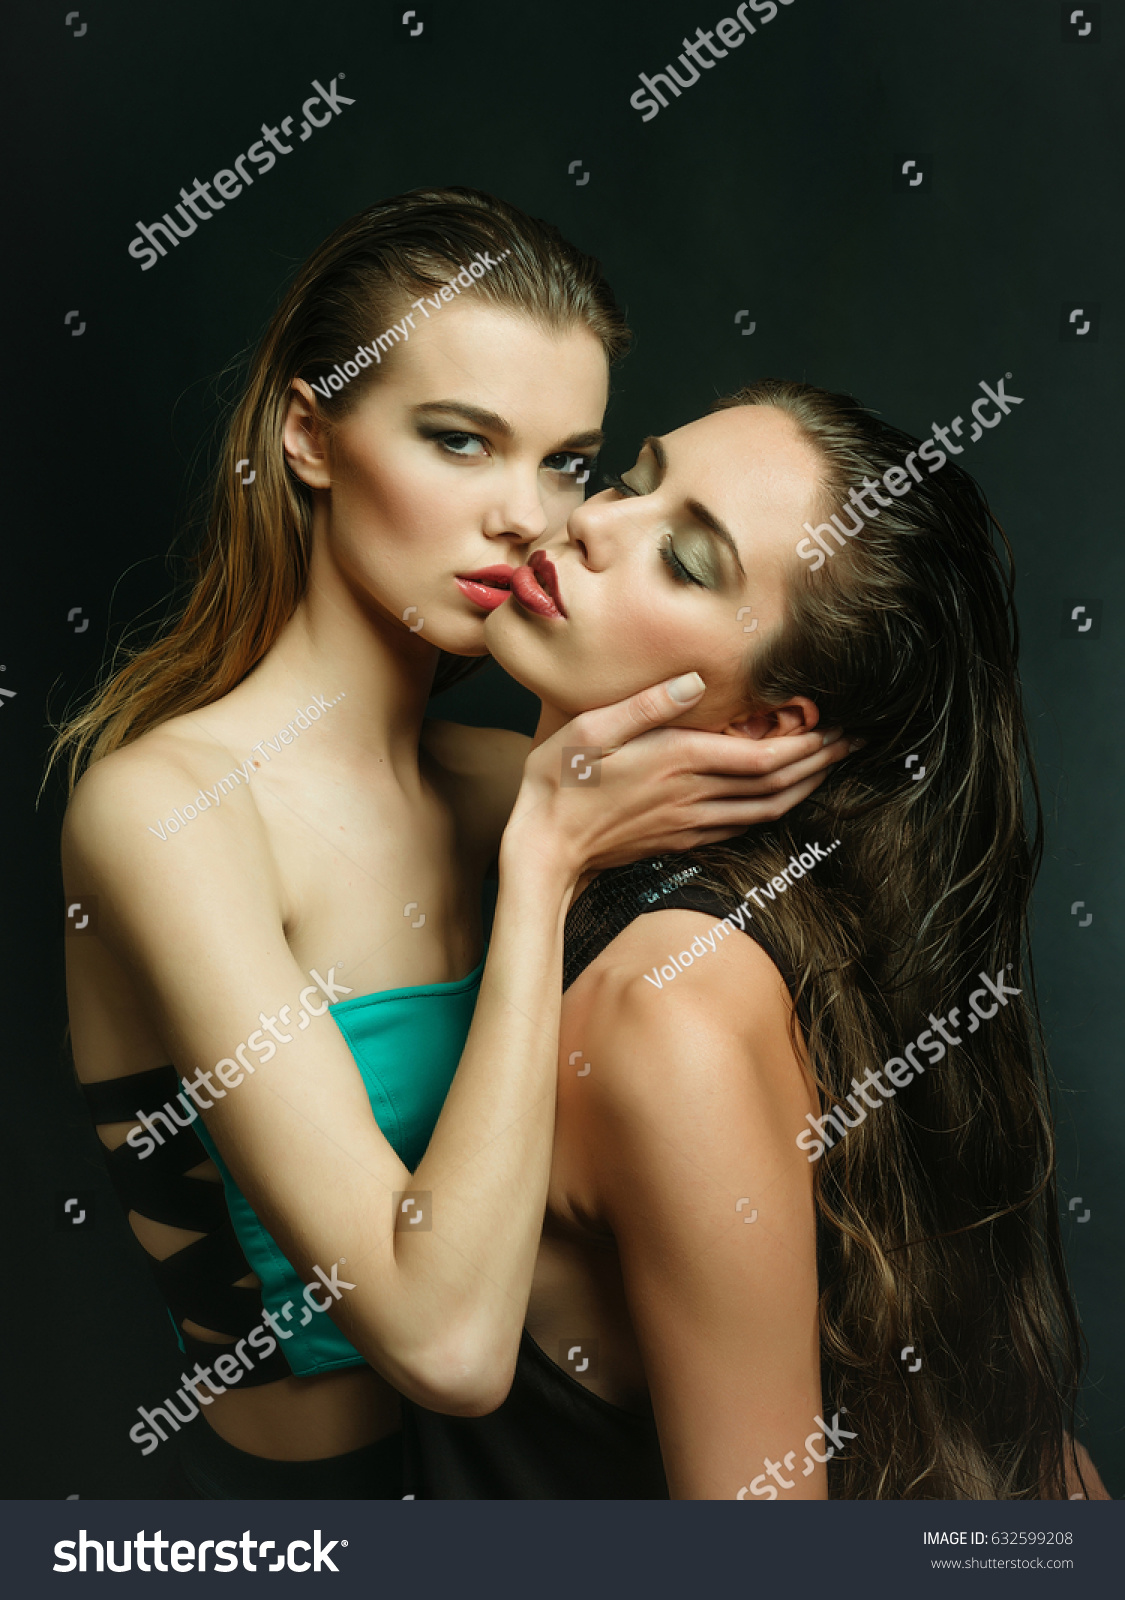 Lesbian Sexy Girls